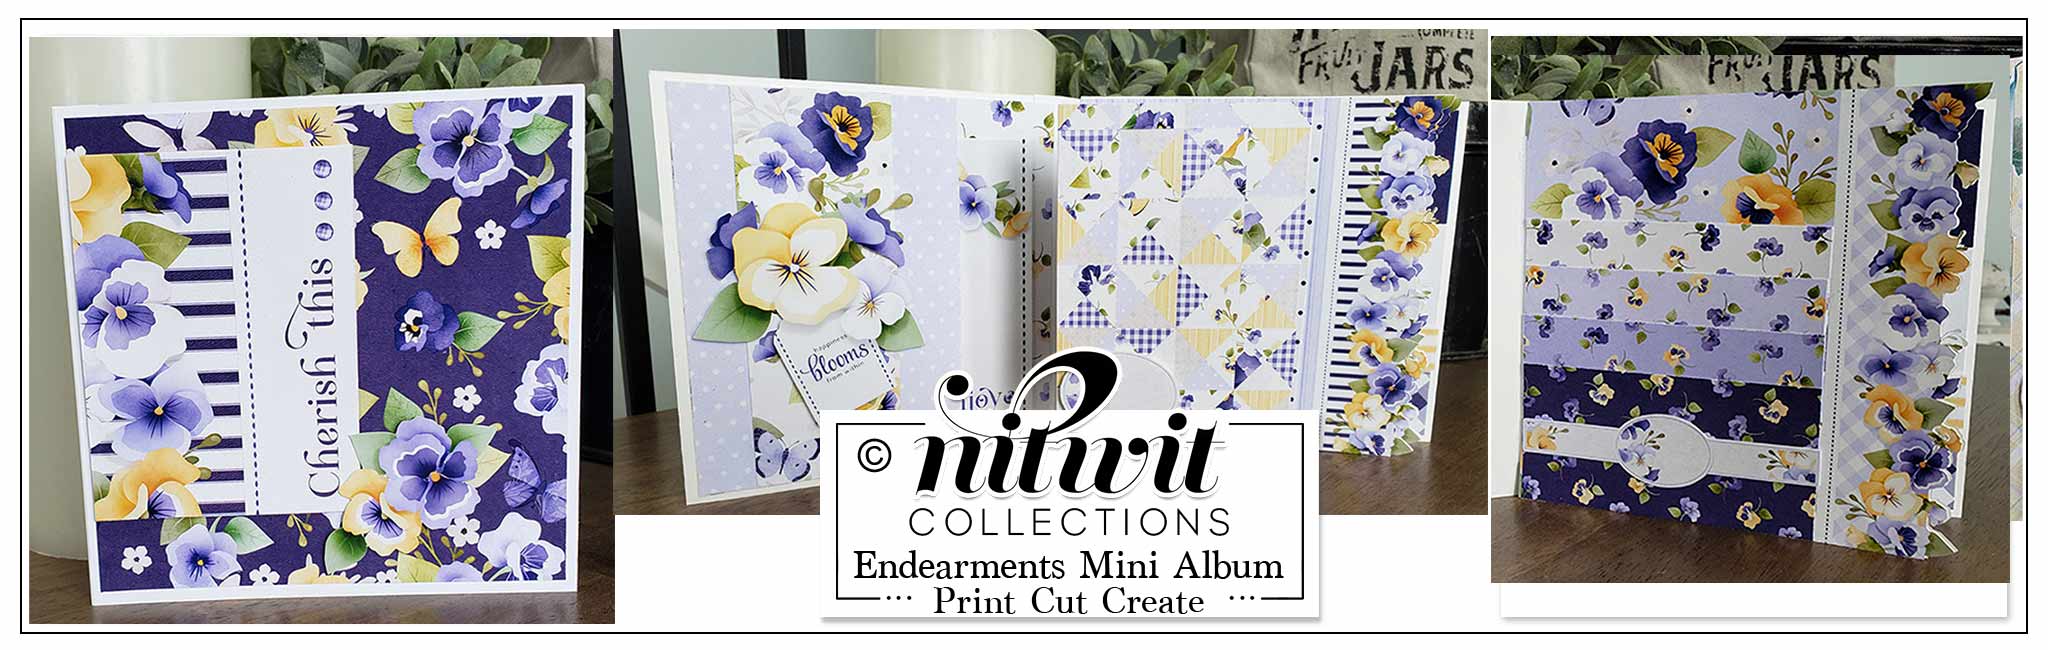 Print Cut Create - Endearments Mini Album